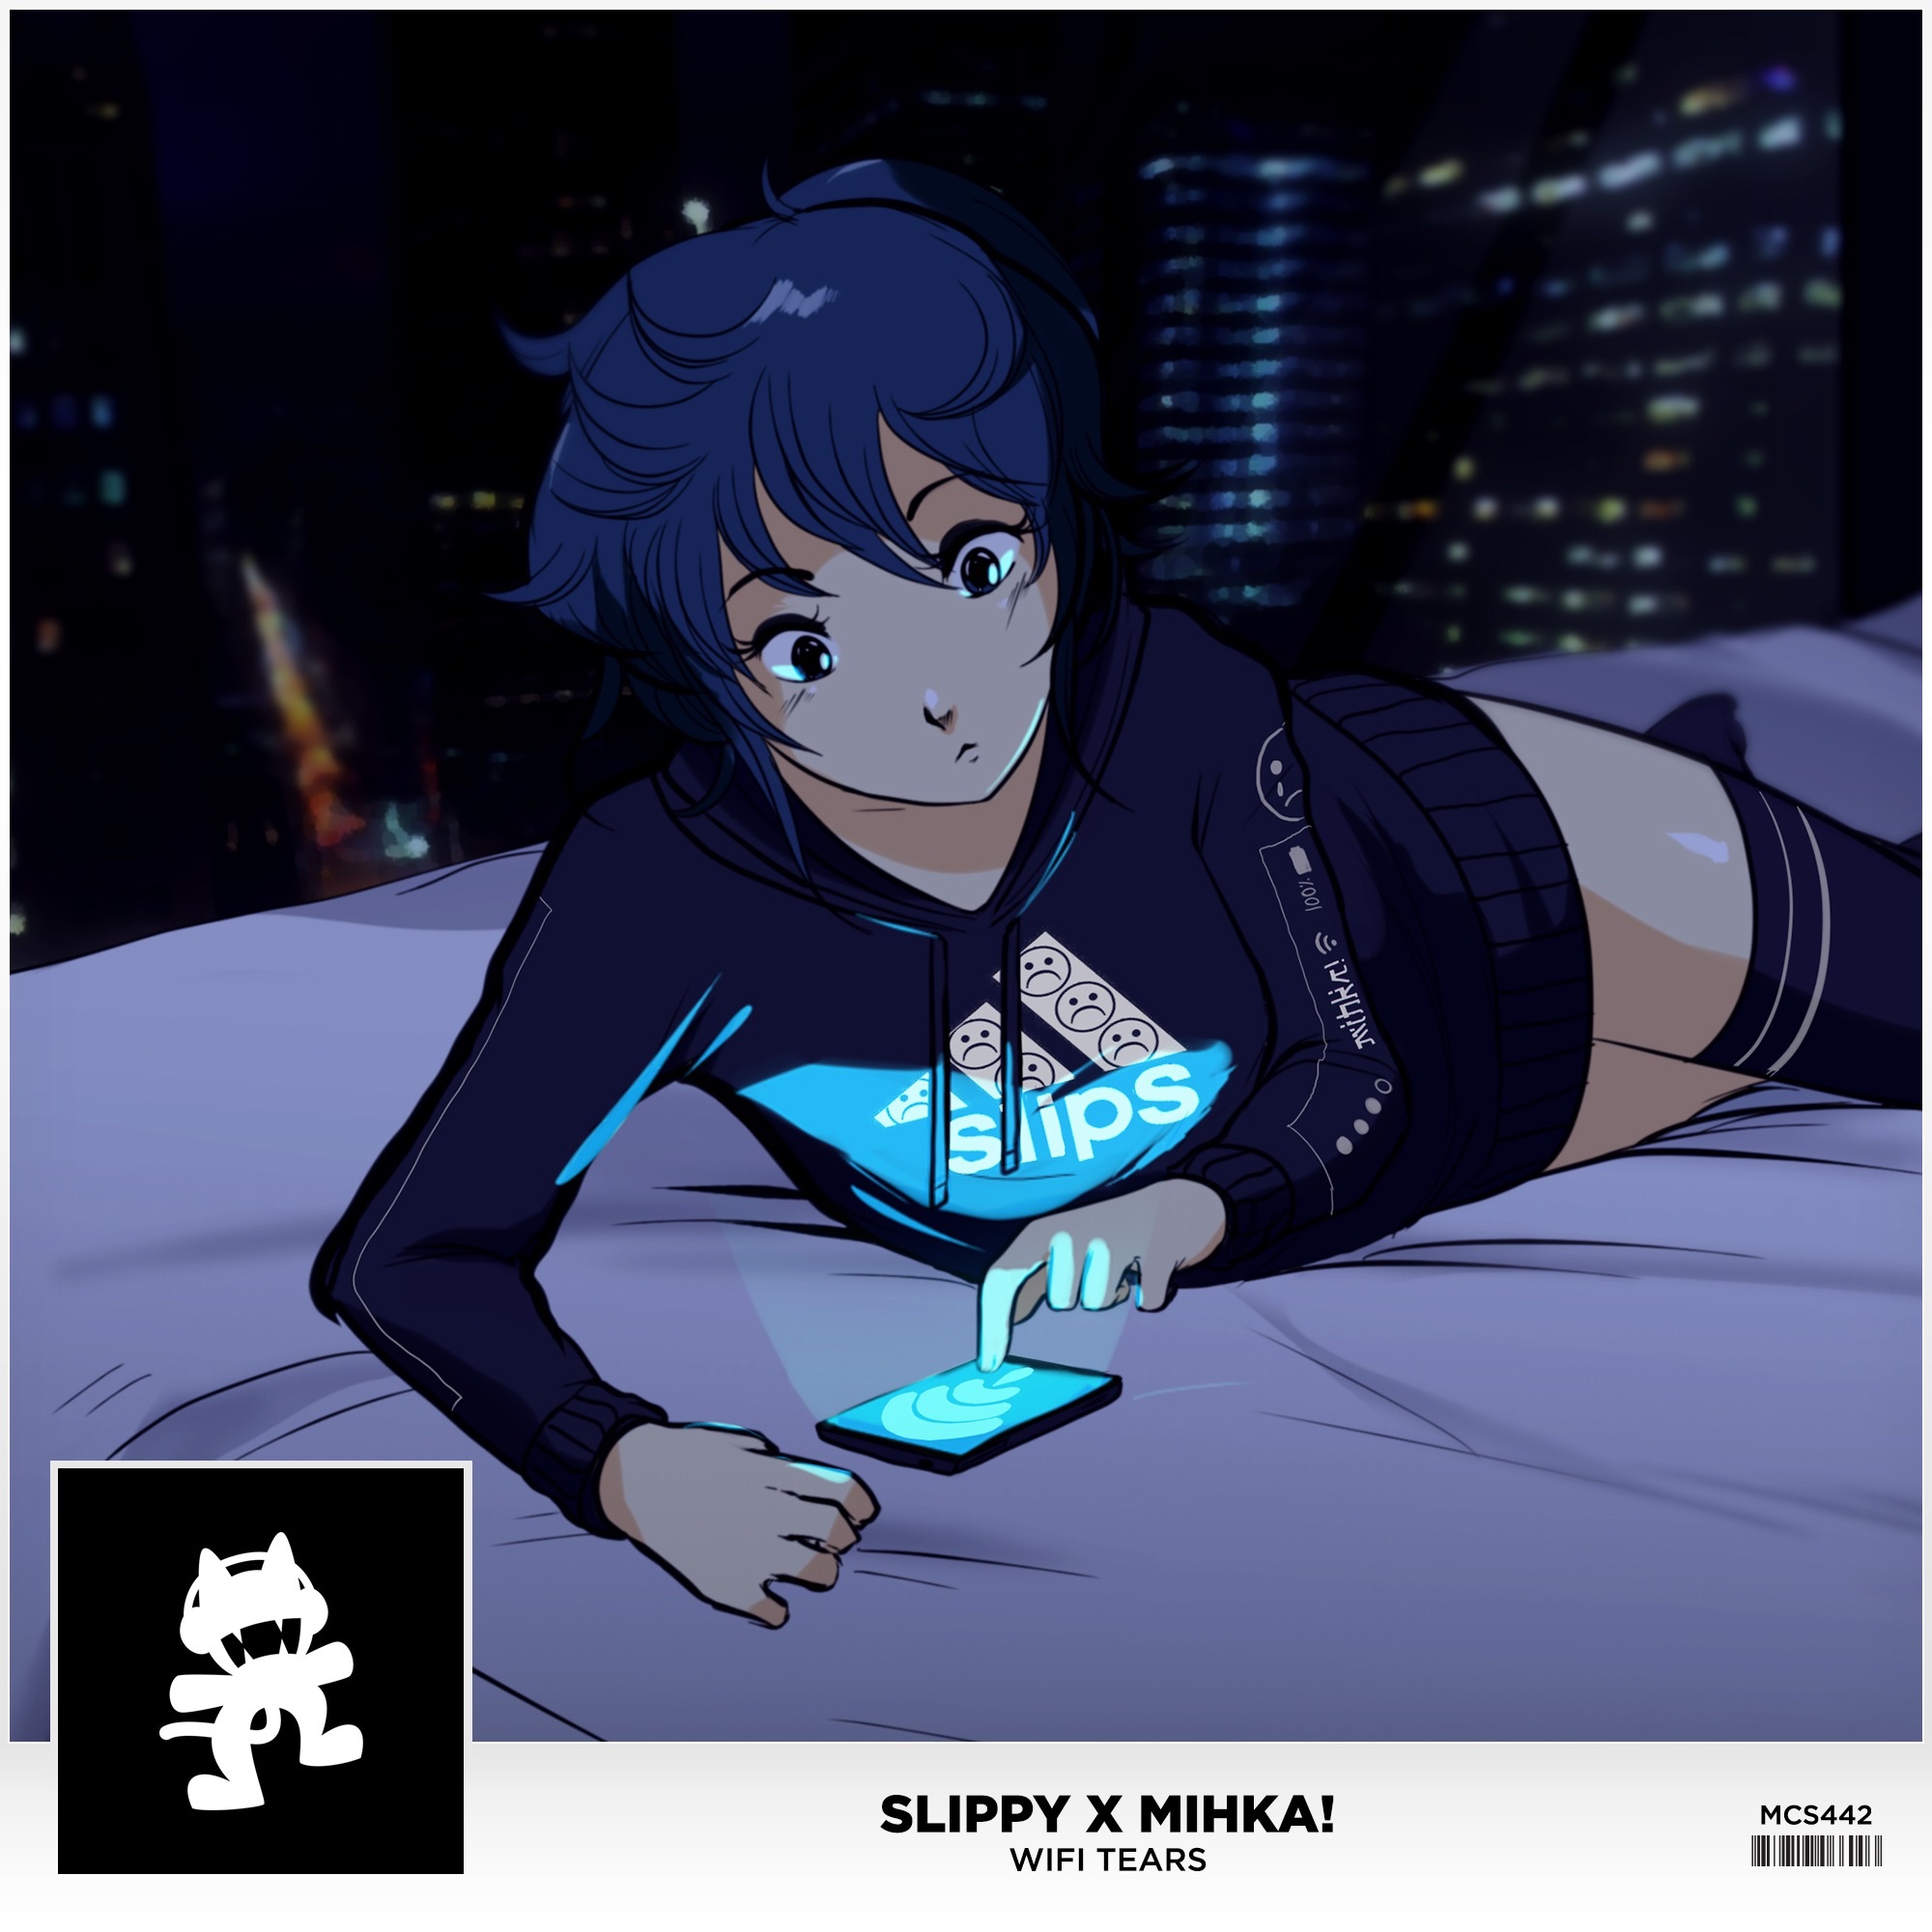 Slippy & Mihka! — WiFi Tears cover artwork